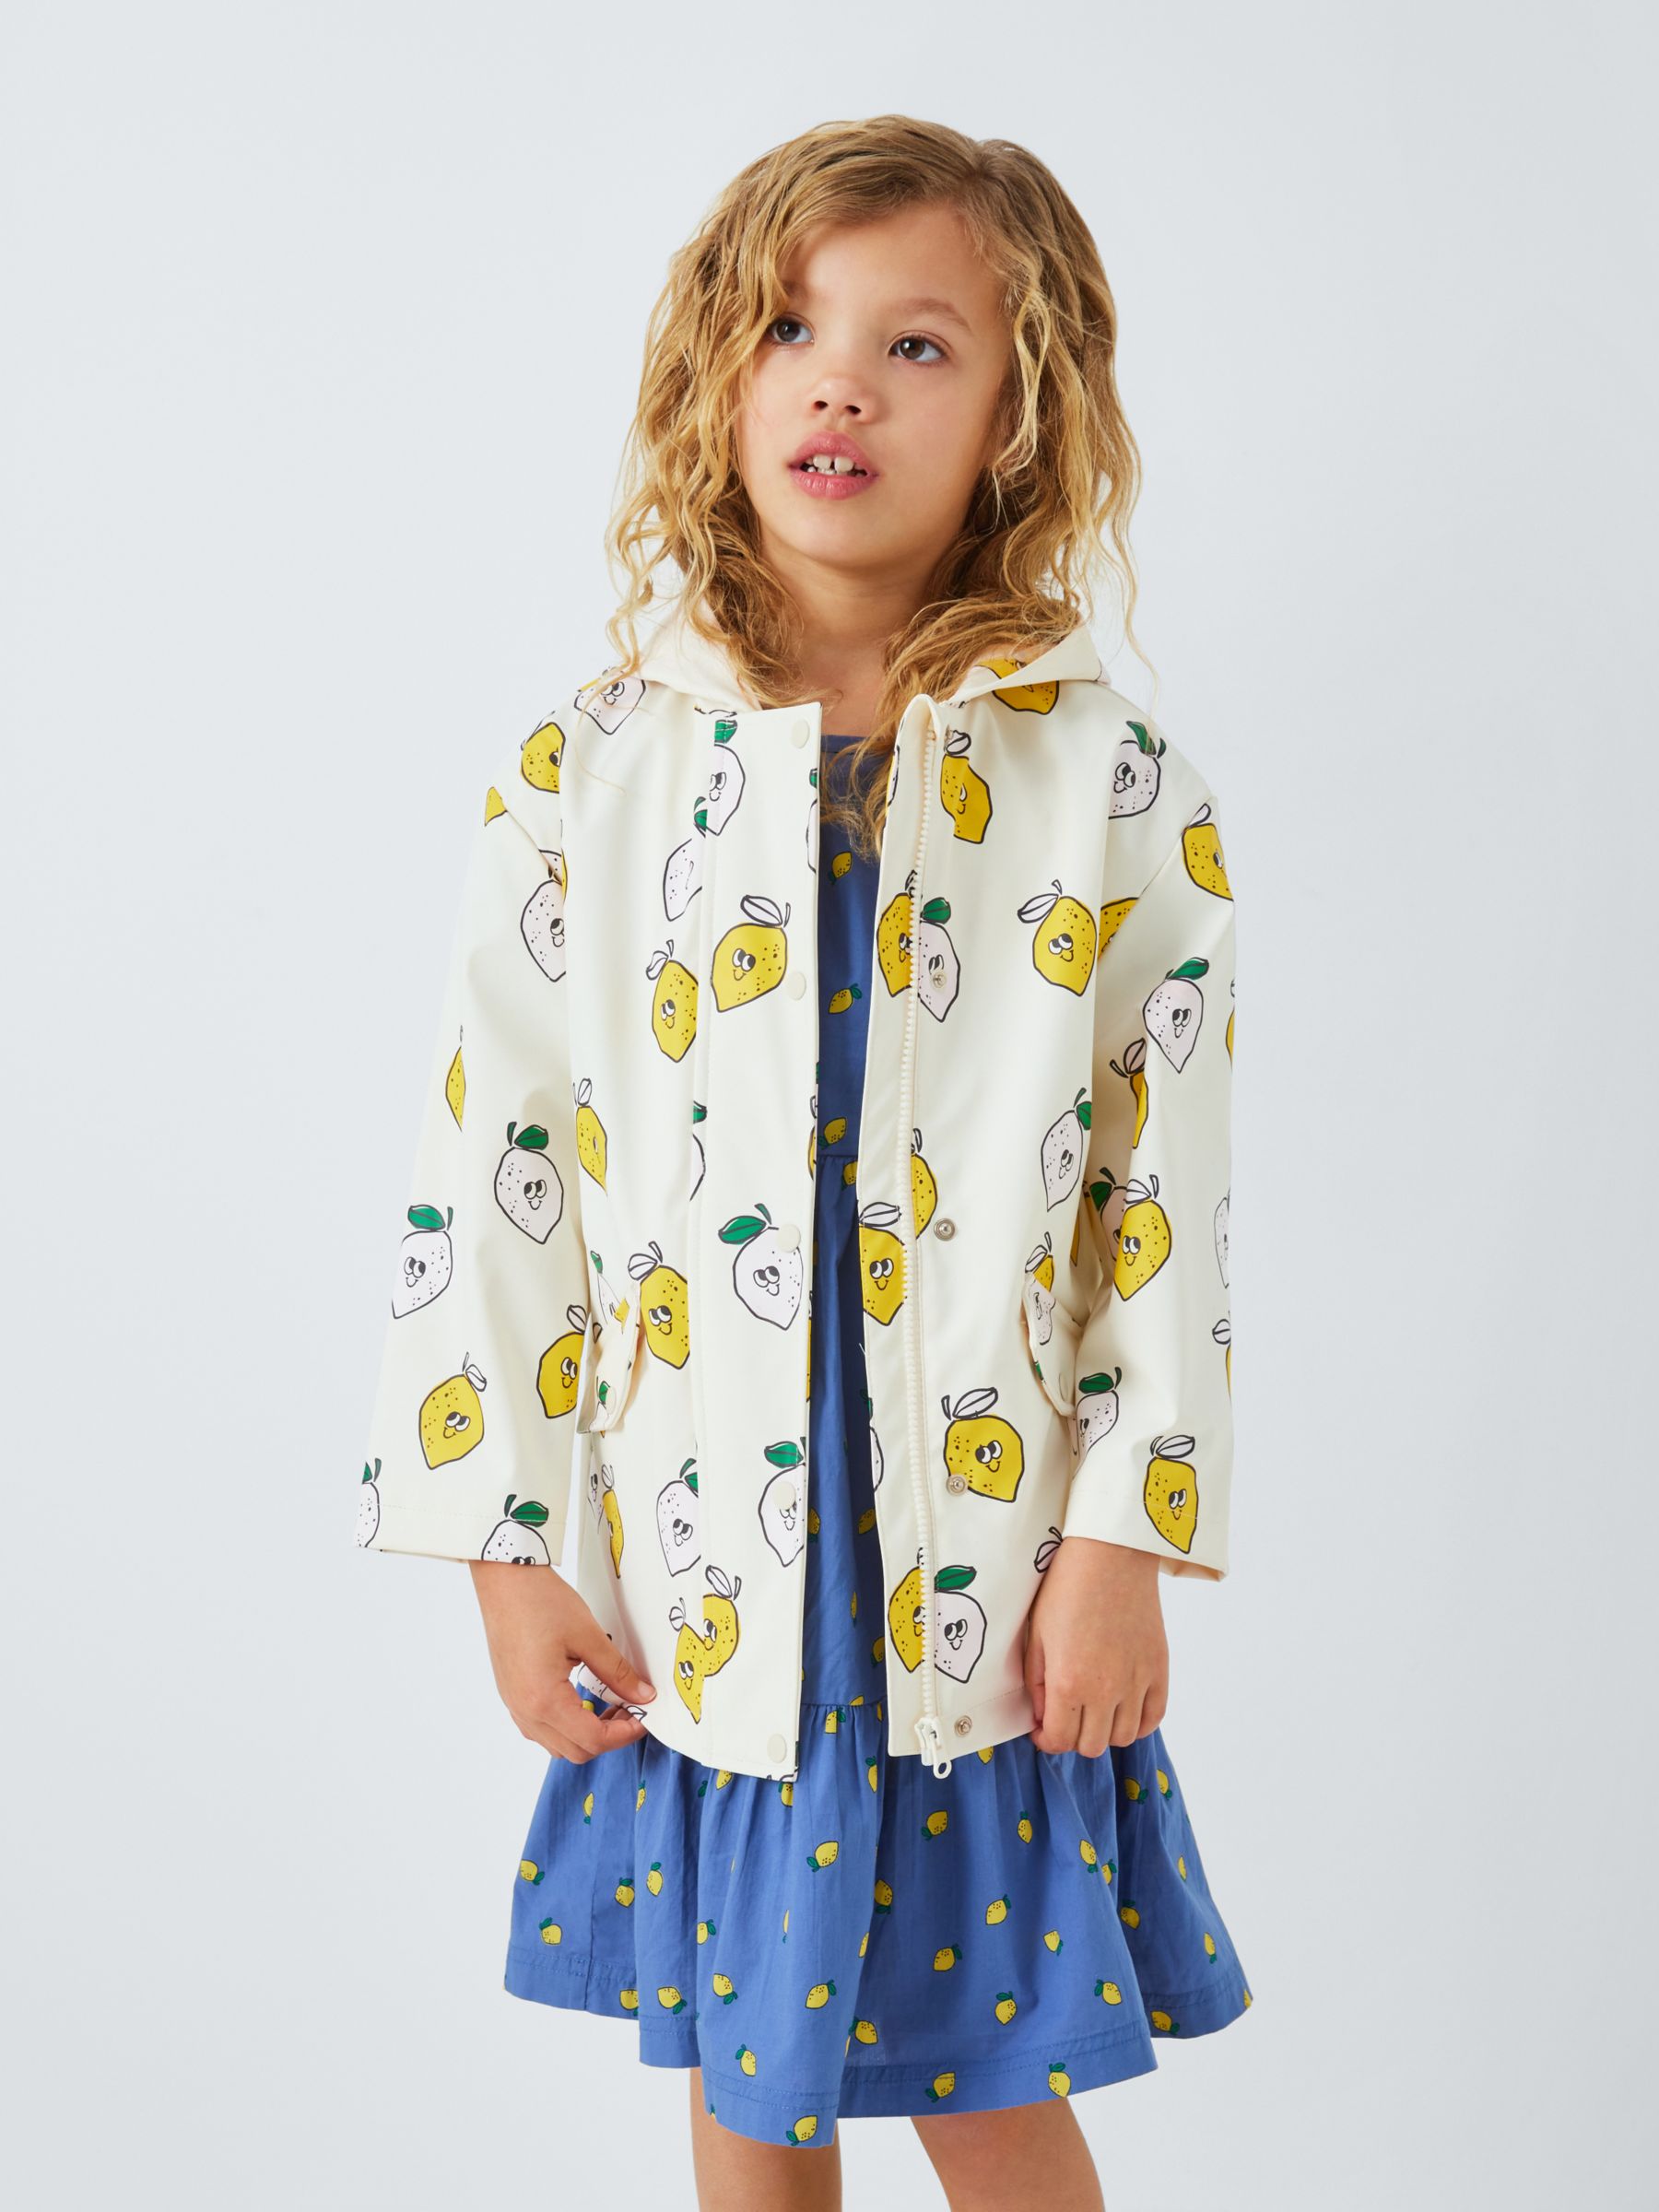 John Lewis ANYDAY Kids' Colour Changing Lemon Print Raincoat, White, 4 years